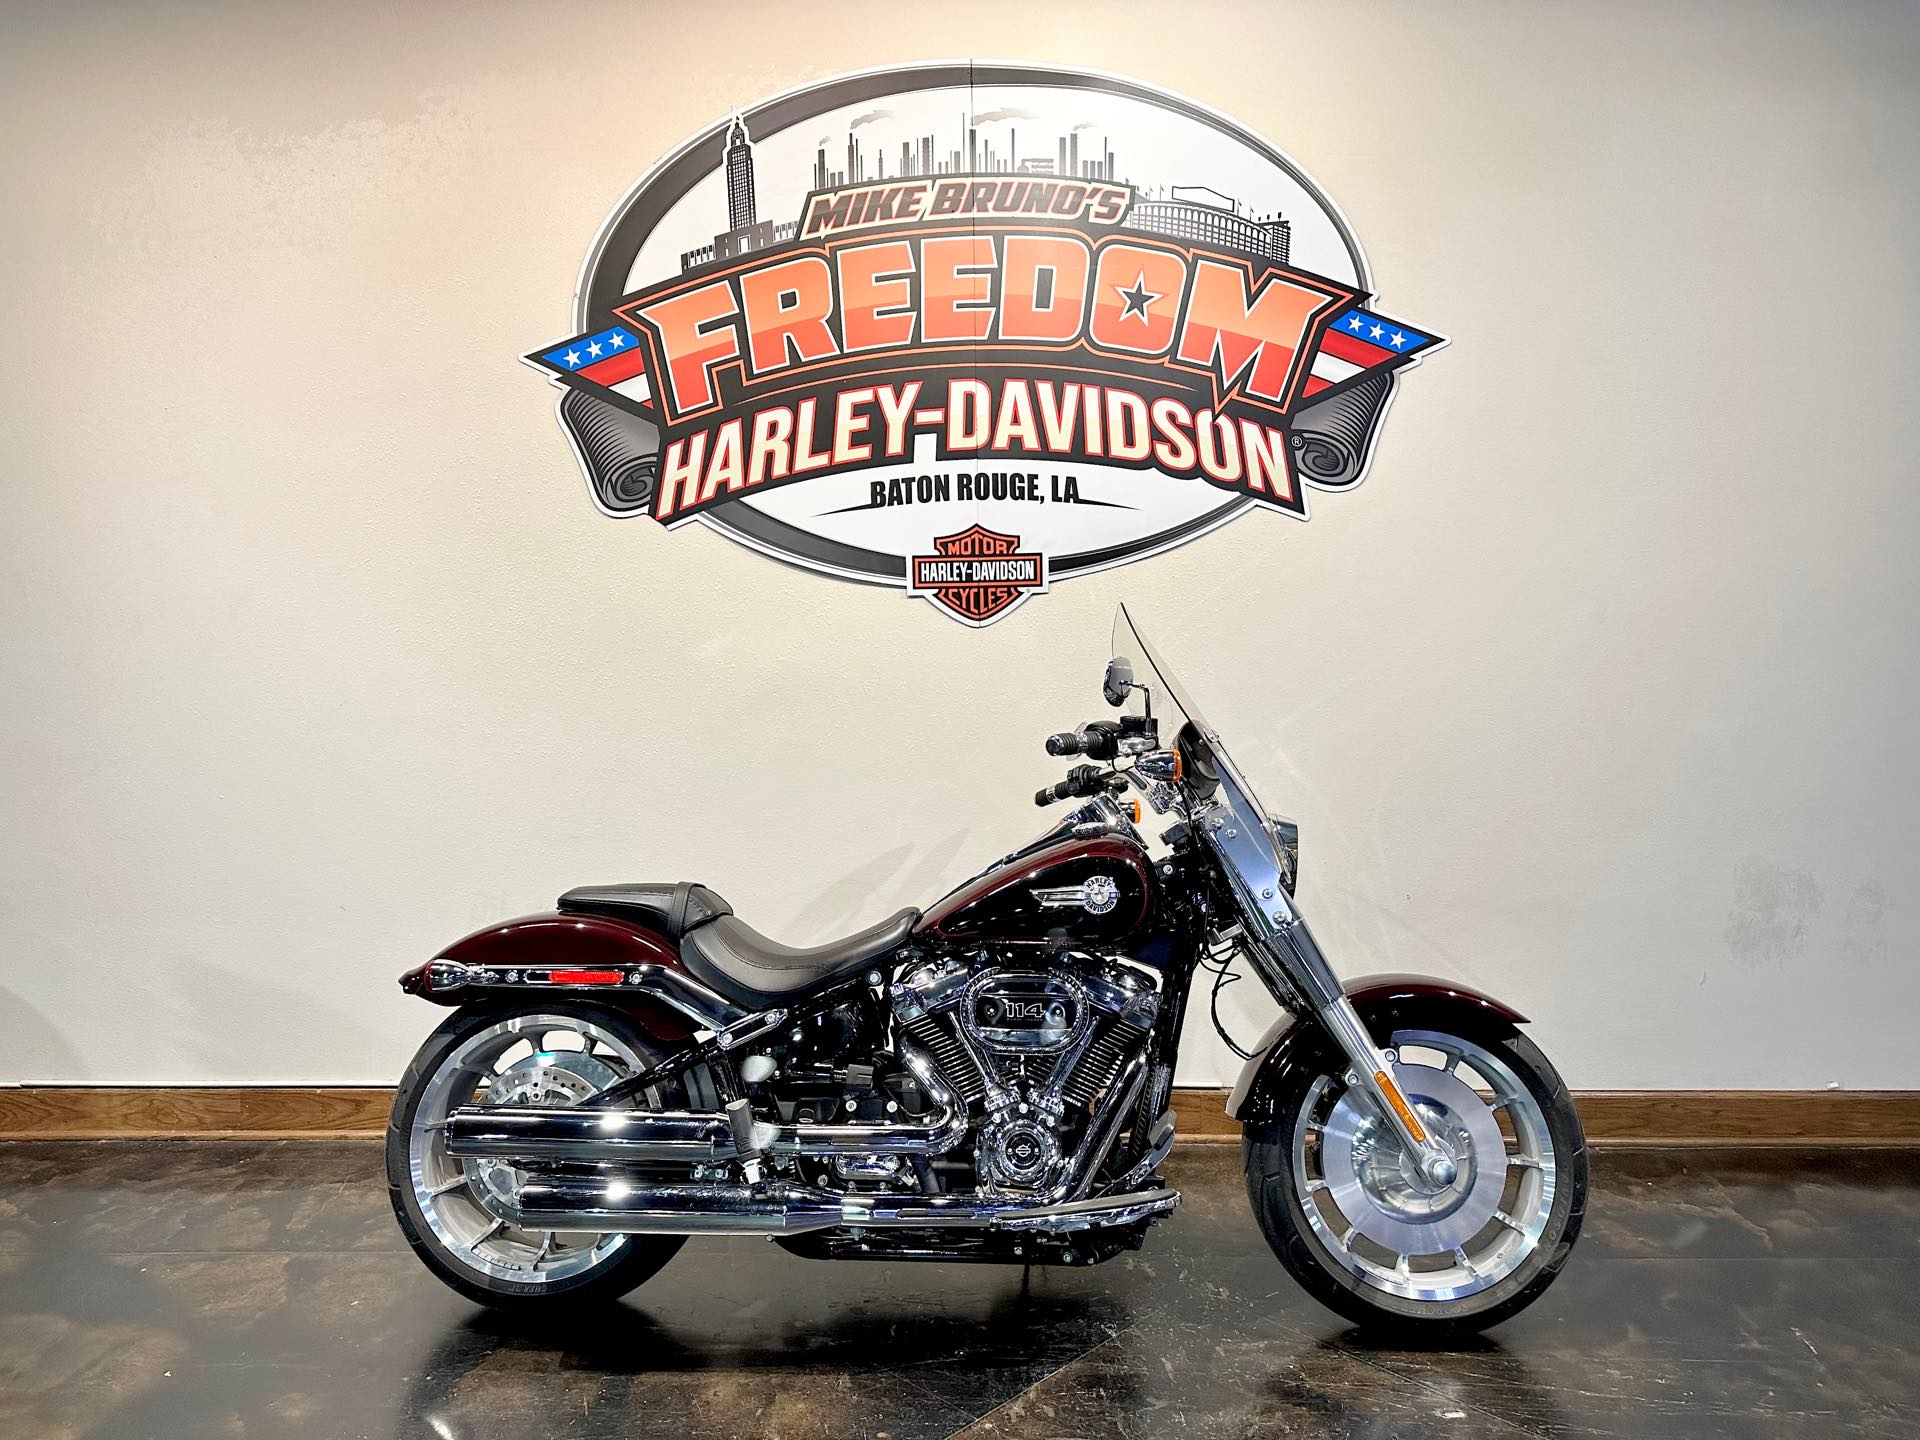 2022 Harley-Davidson Softail Fat Boy 114 at Mike Bruno's Freedom Harley-Davidson